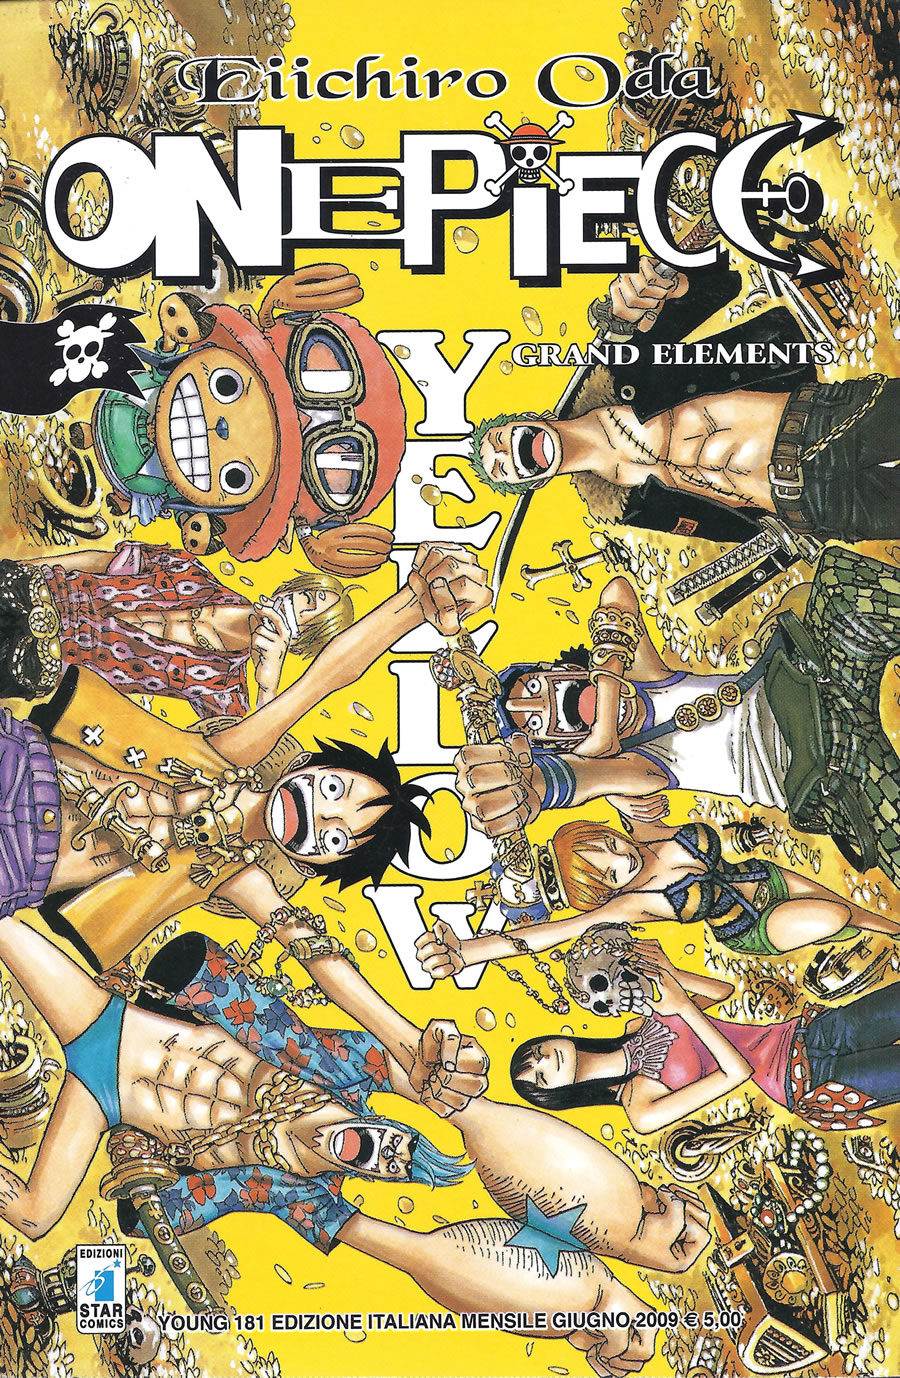 One Piece Yellow